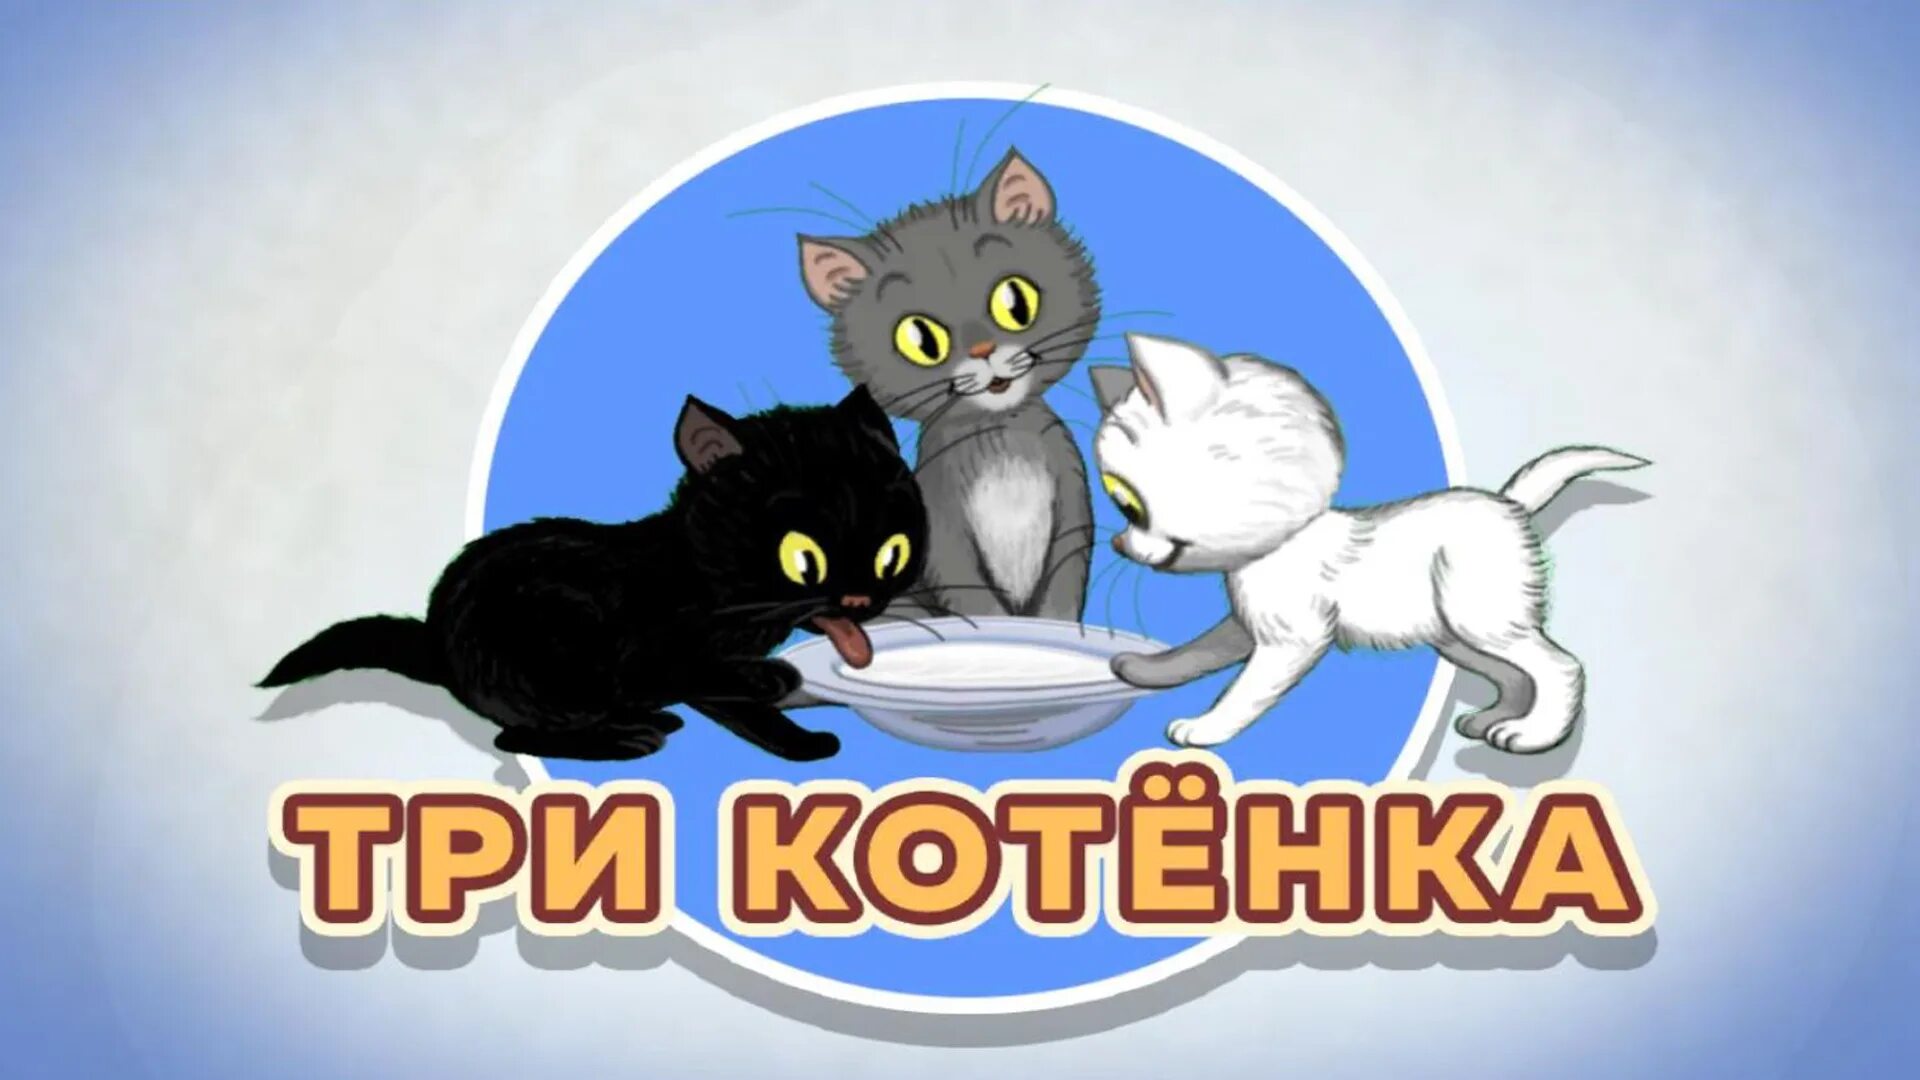 Сутеев в. "три котенка". Три котенка сказка Сутеев. Рассказ три котенка. Три кота сказка Сутеева. Три котенка слова